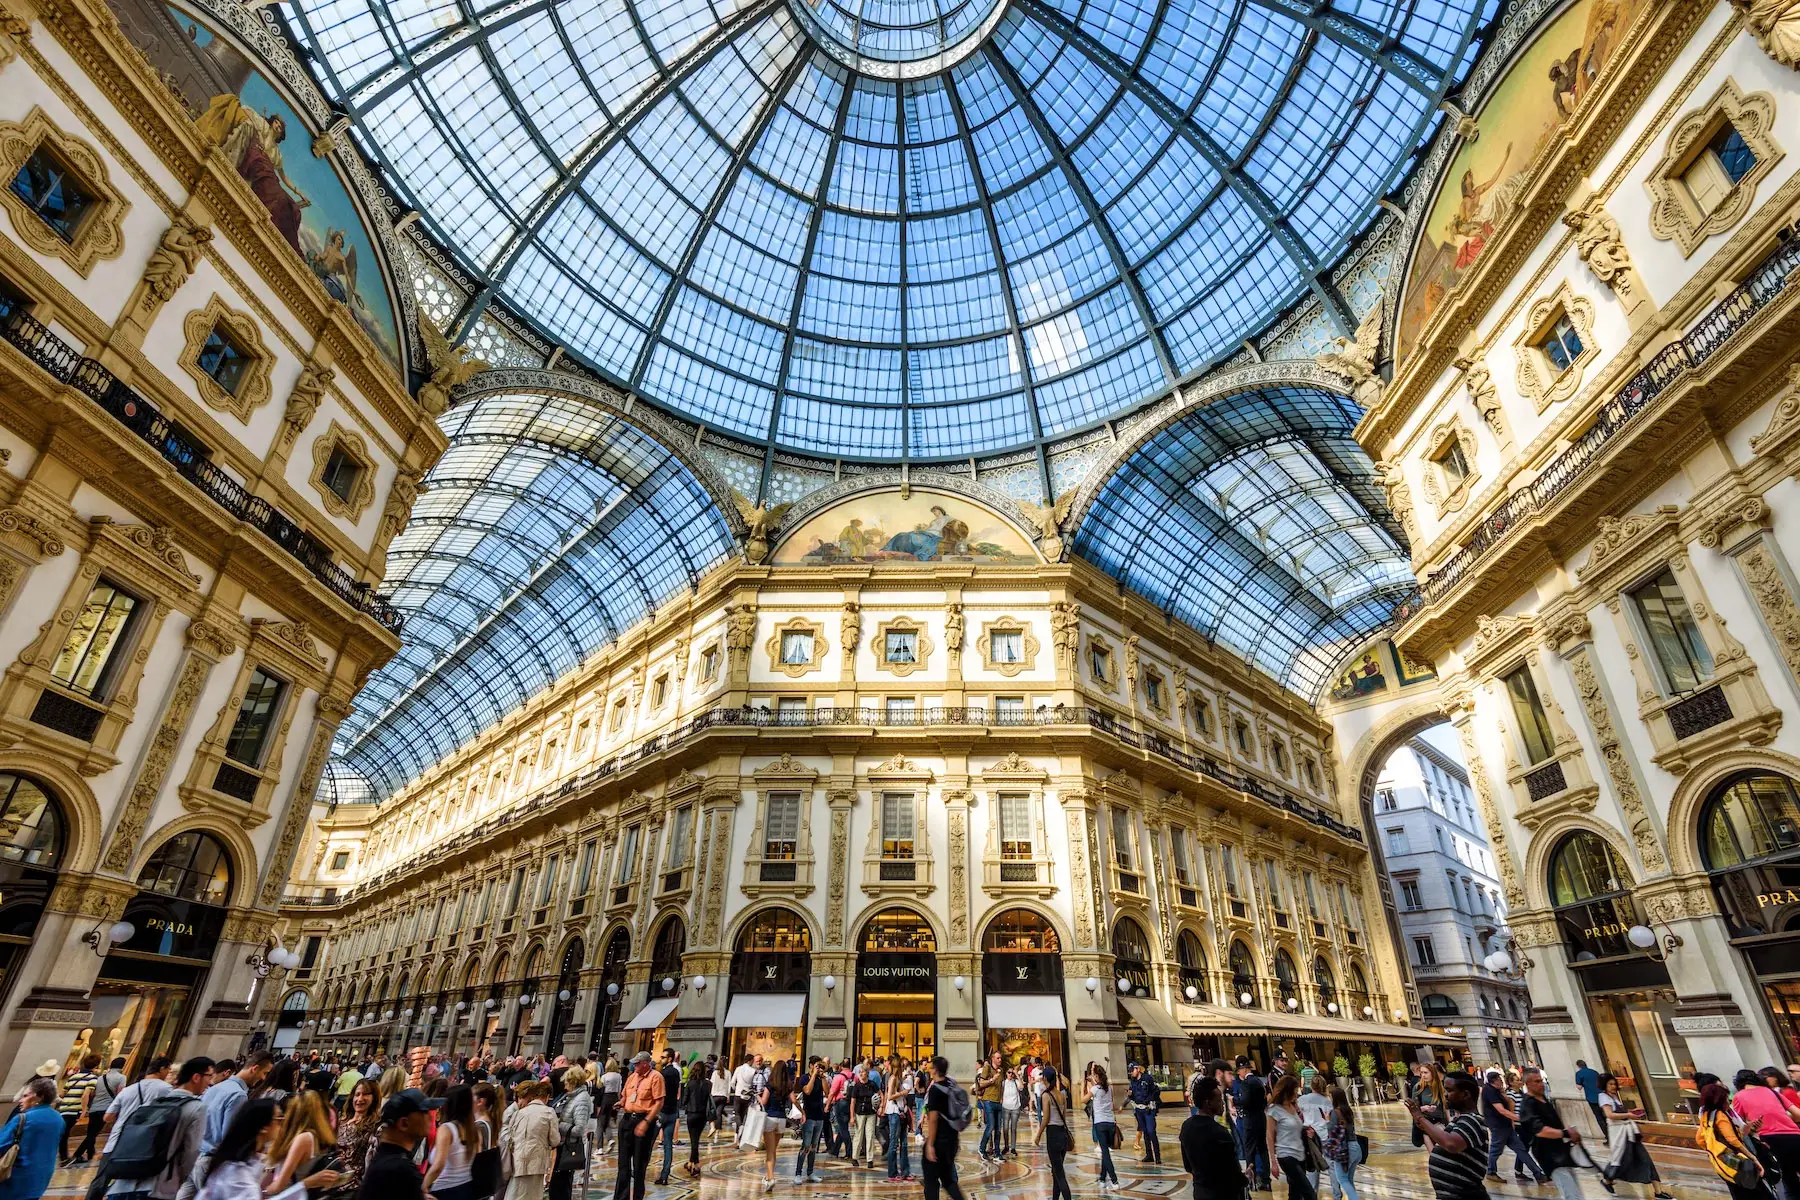 Crowds at the Galleria Vittorio Emanuele II in Milan